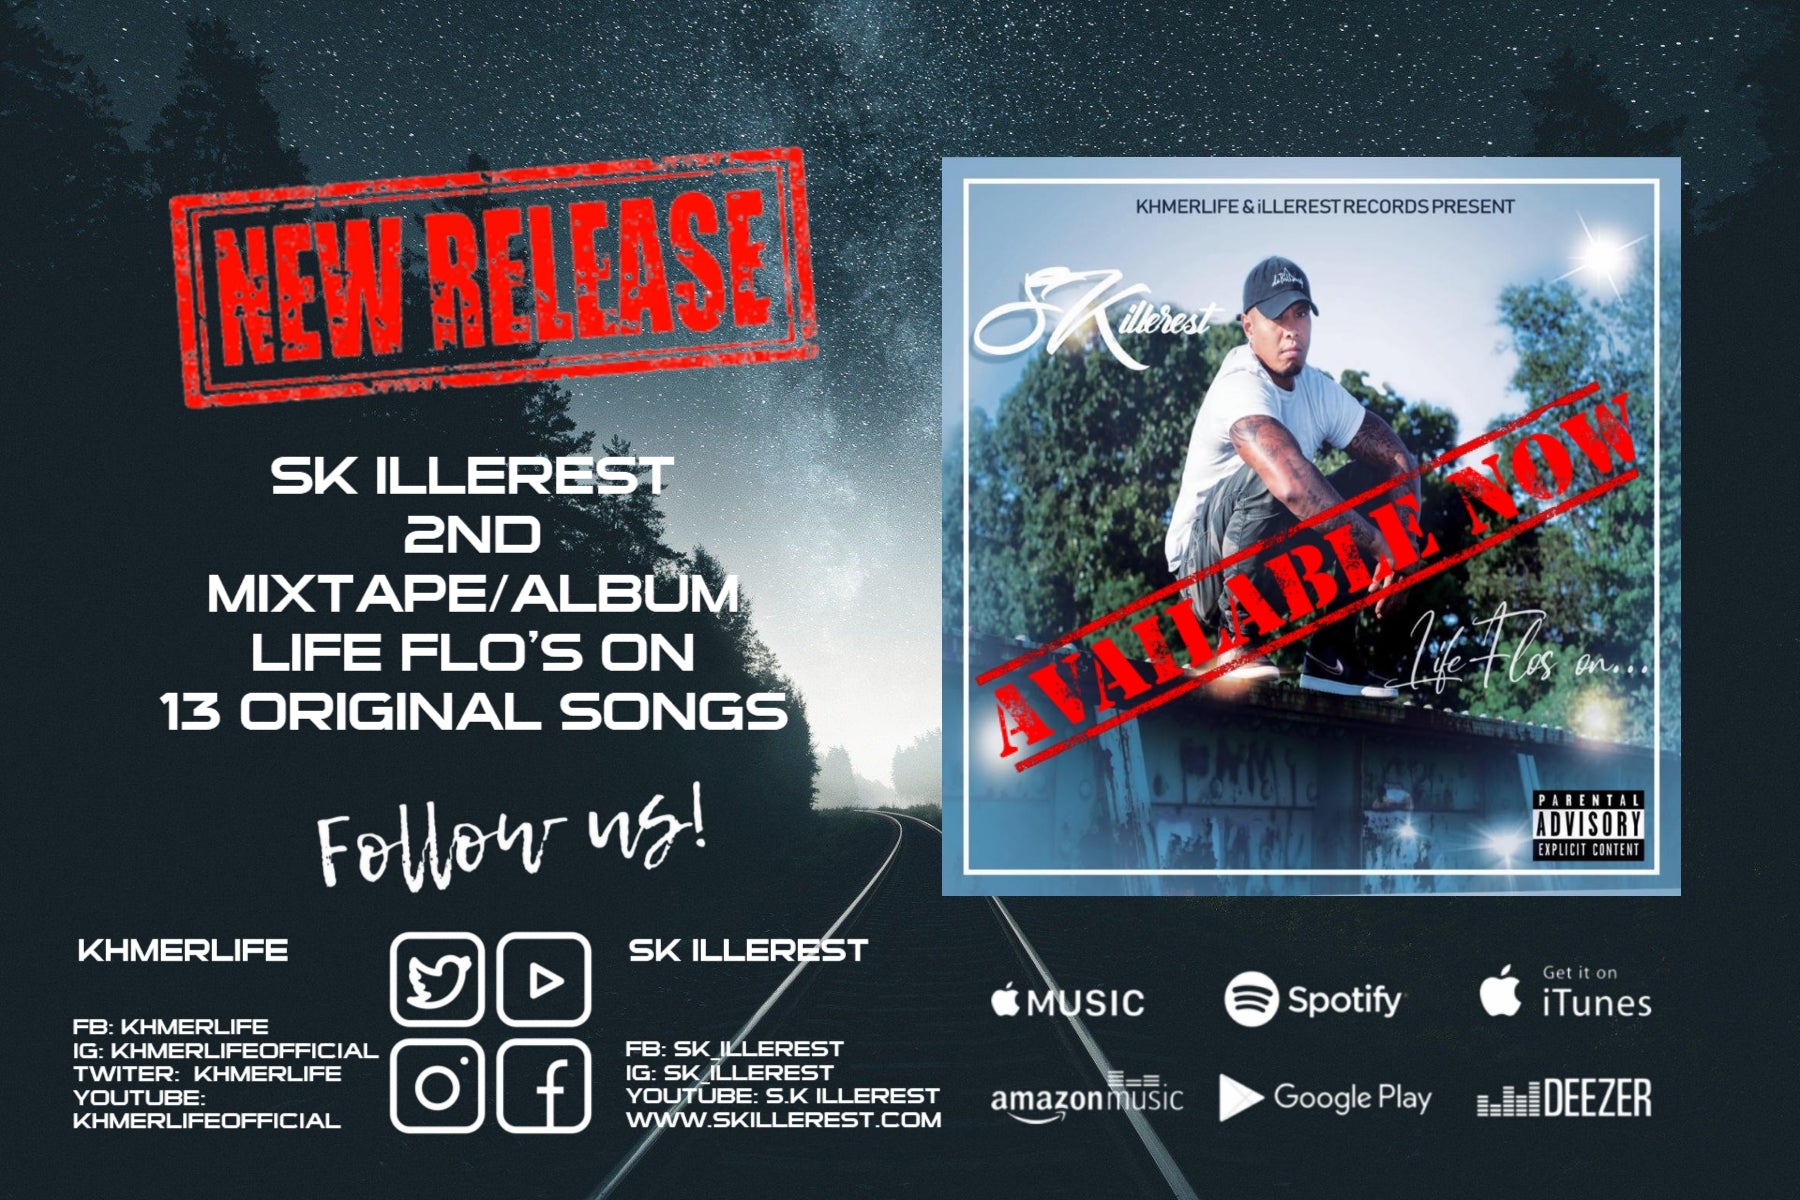 SK ILLEREST New Album/Mixtape &#8220;Life Flow&#8217;s On&#8221; Out Now